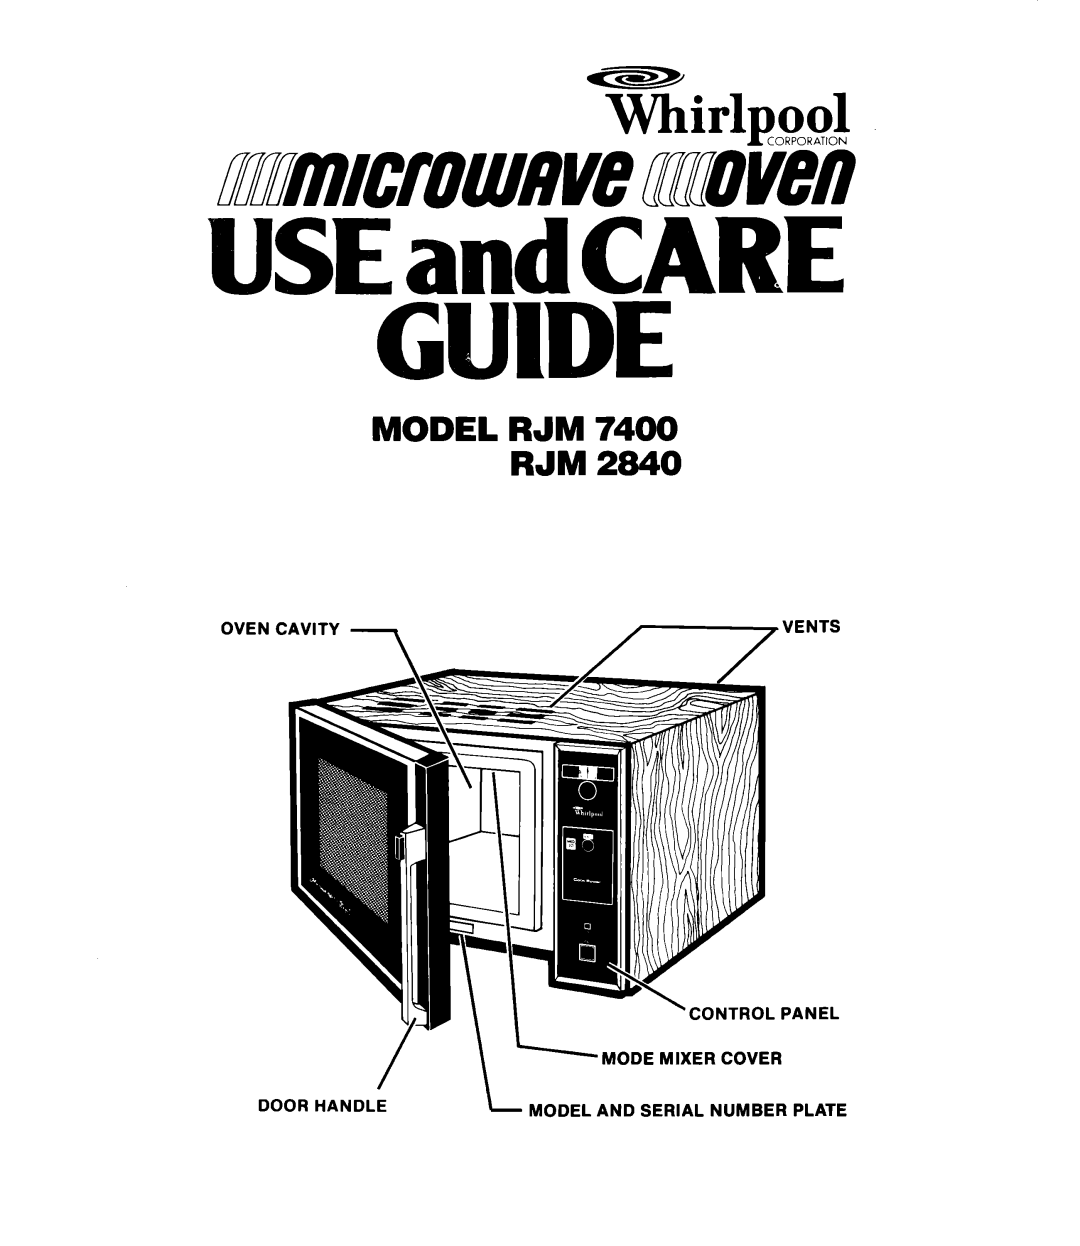 Whirlpool RJM 2840, RJM 7400 manual TLirlpool, Model Rjm Rjm, Guide, mmicfouflviemoveflCORPORATION USEandCARE, Vents 